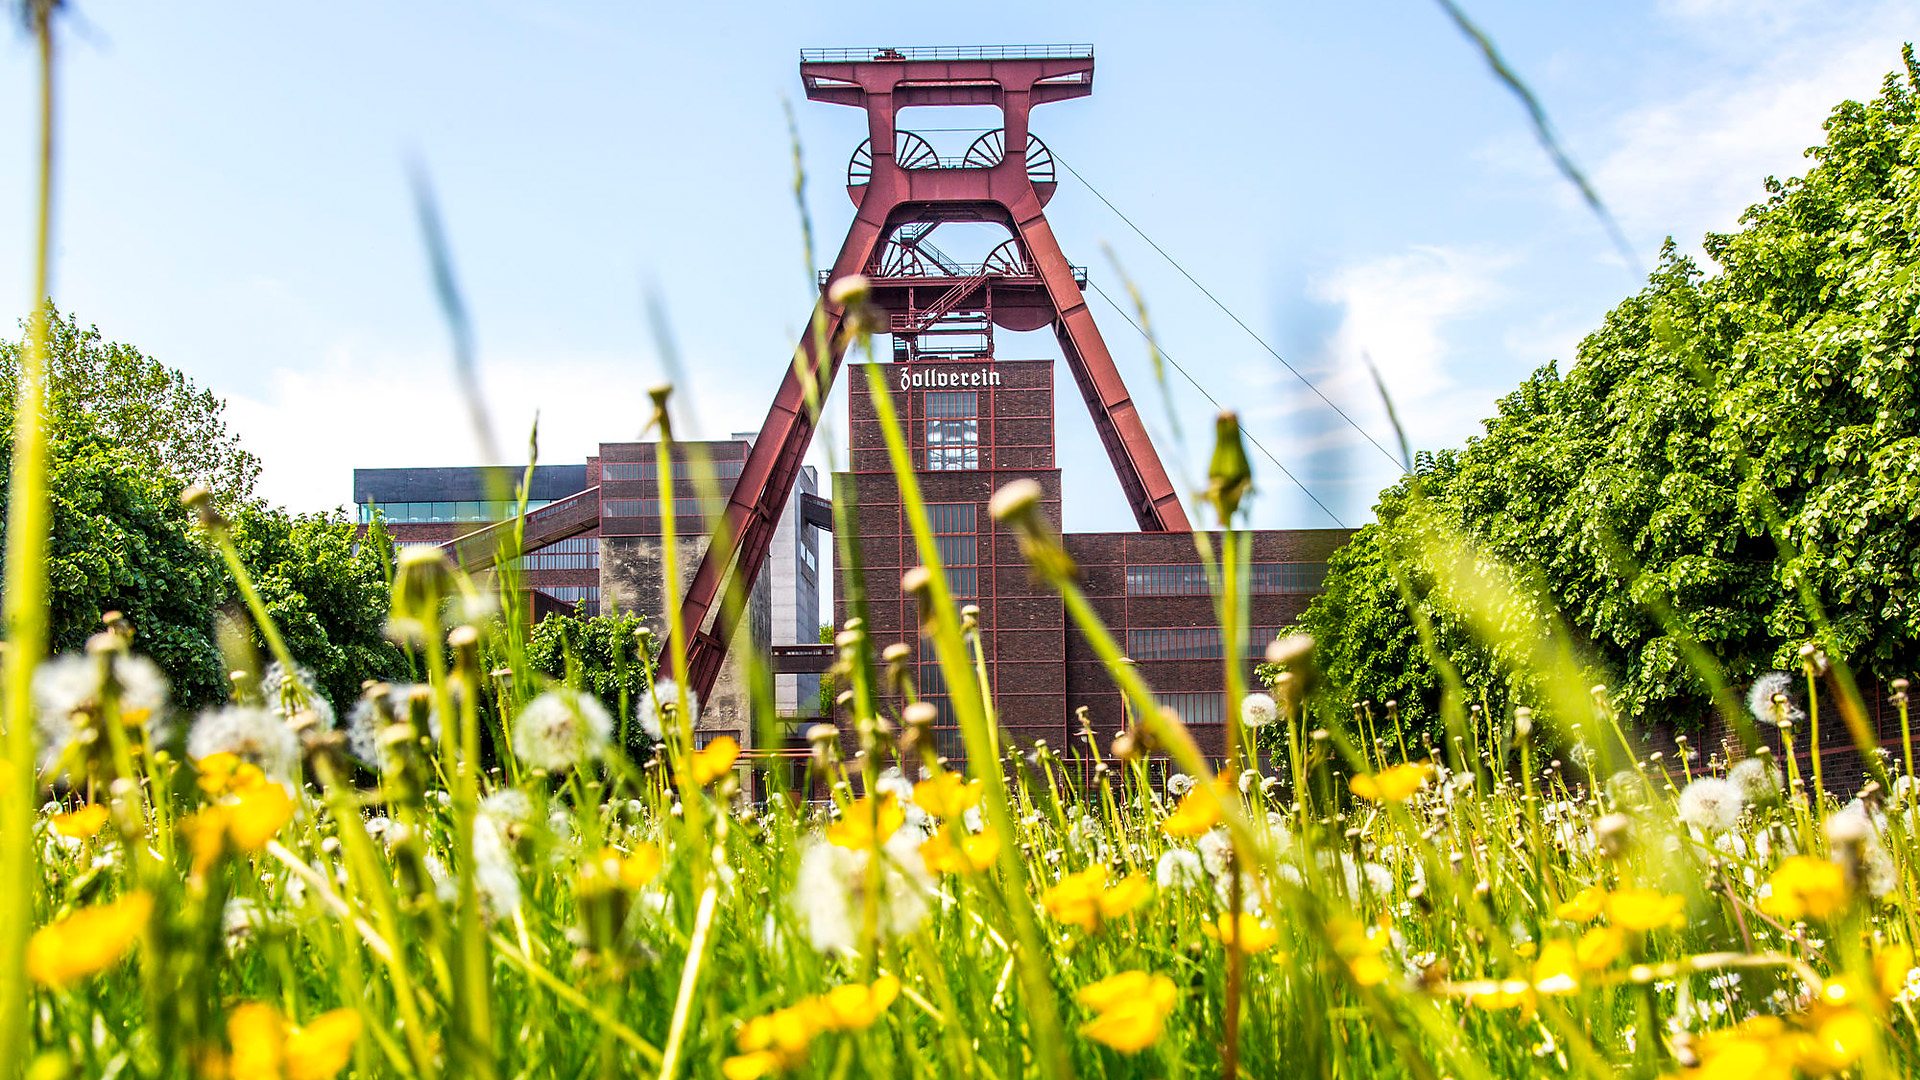 The Zollverein in Essen, Germany